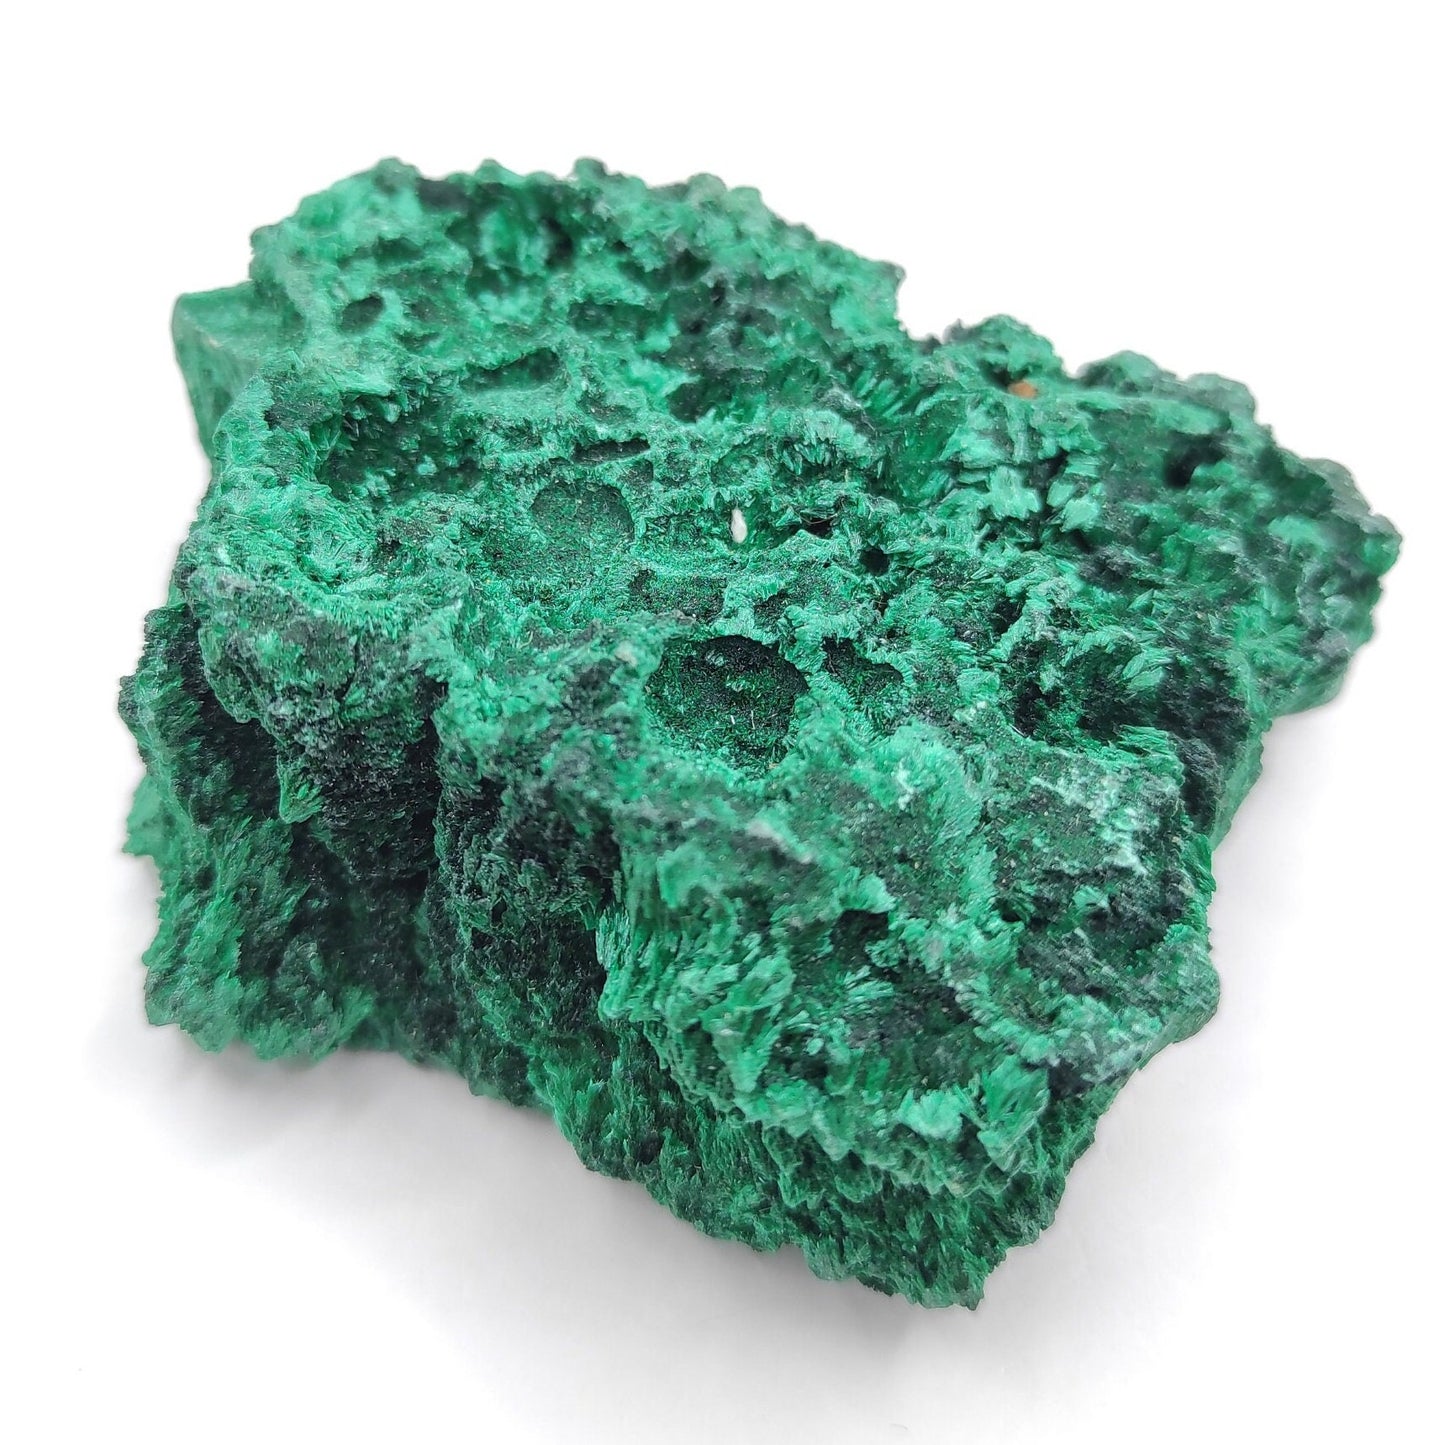 180g Fibrous Malachite - Natural Malachite from Hubei, China - Rough Malachite Specimen - Mineral Specimen - Green Malachite Crystal